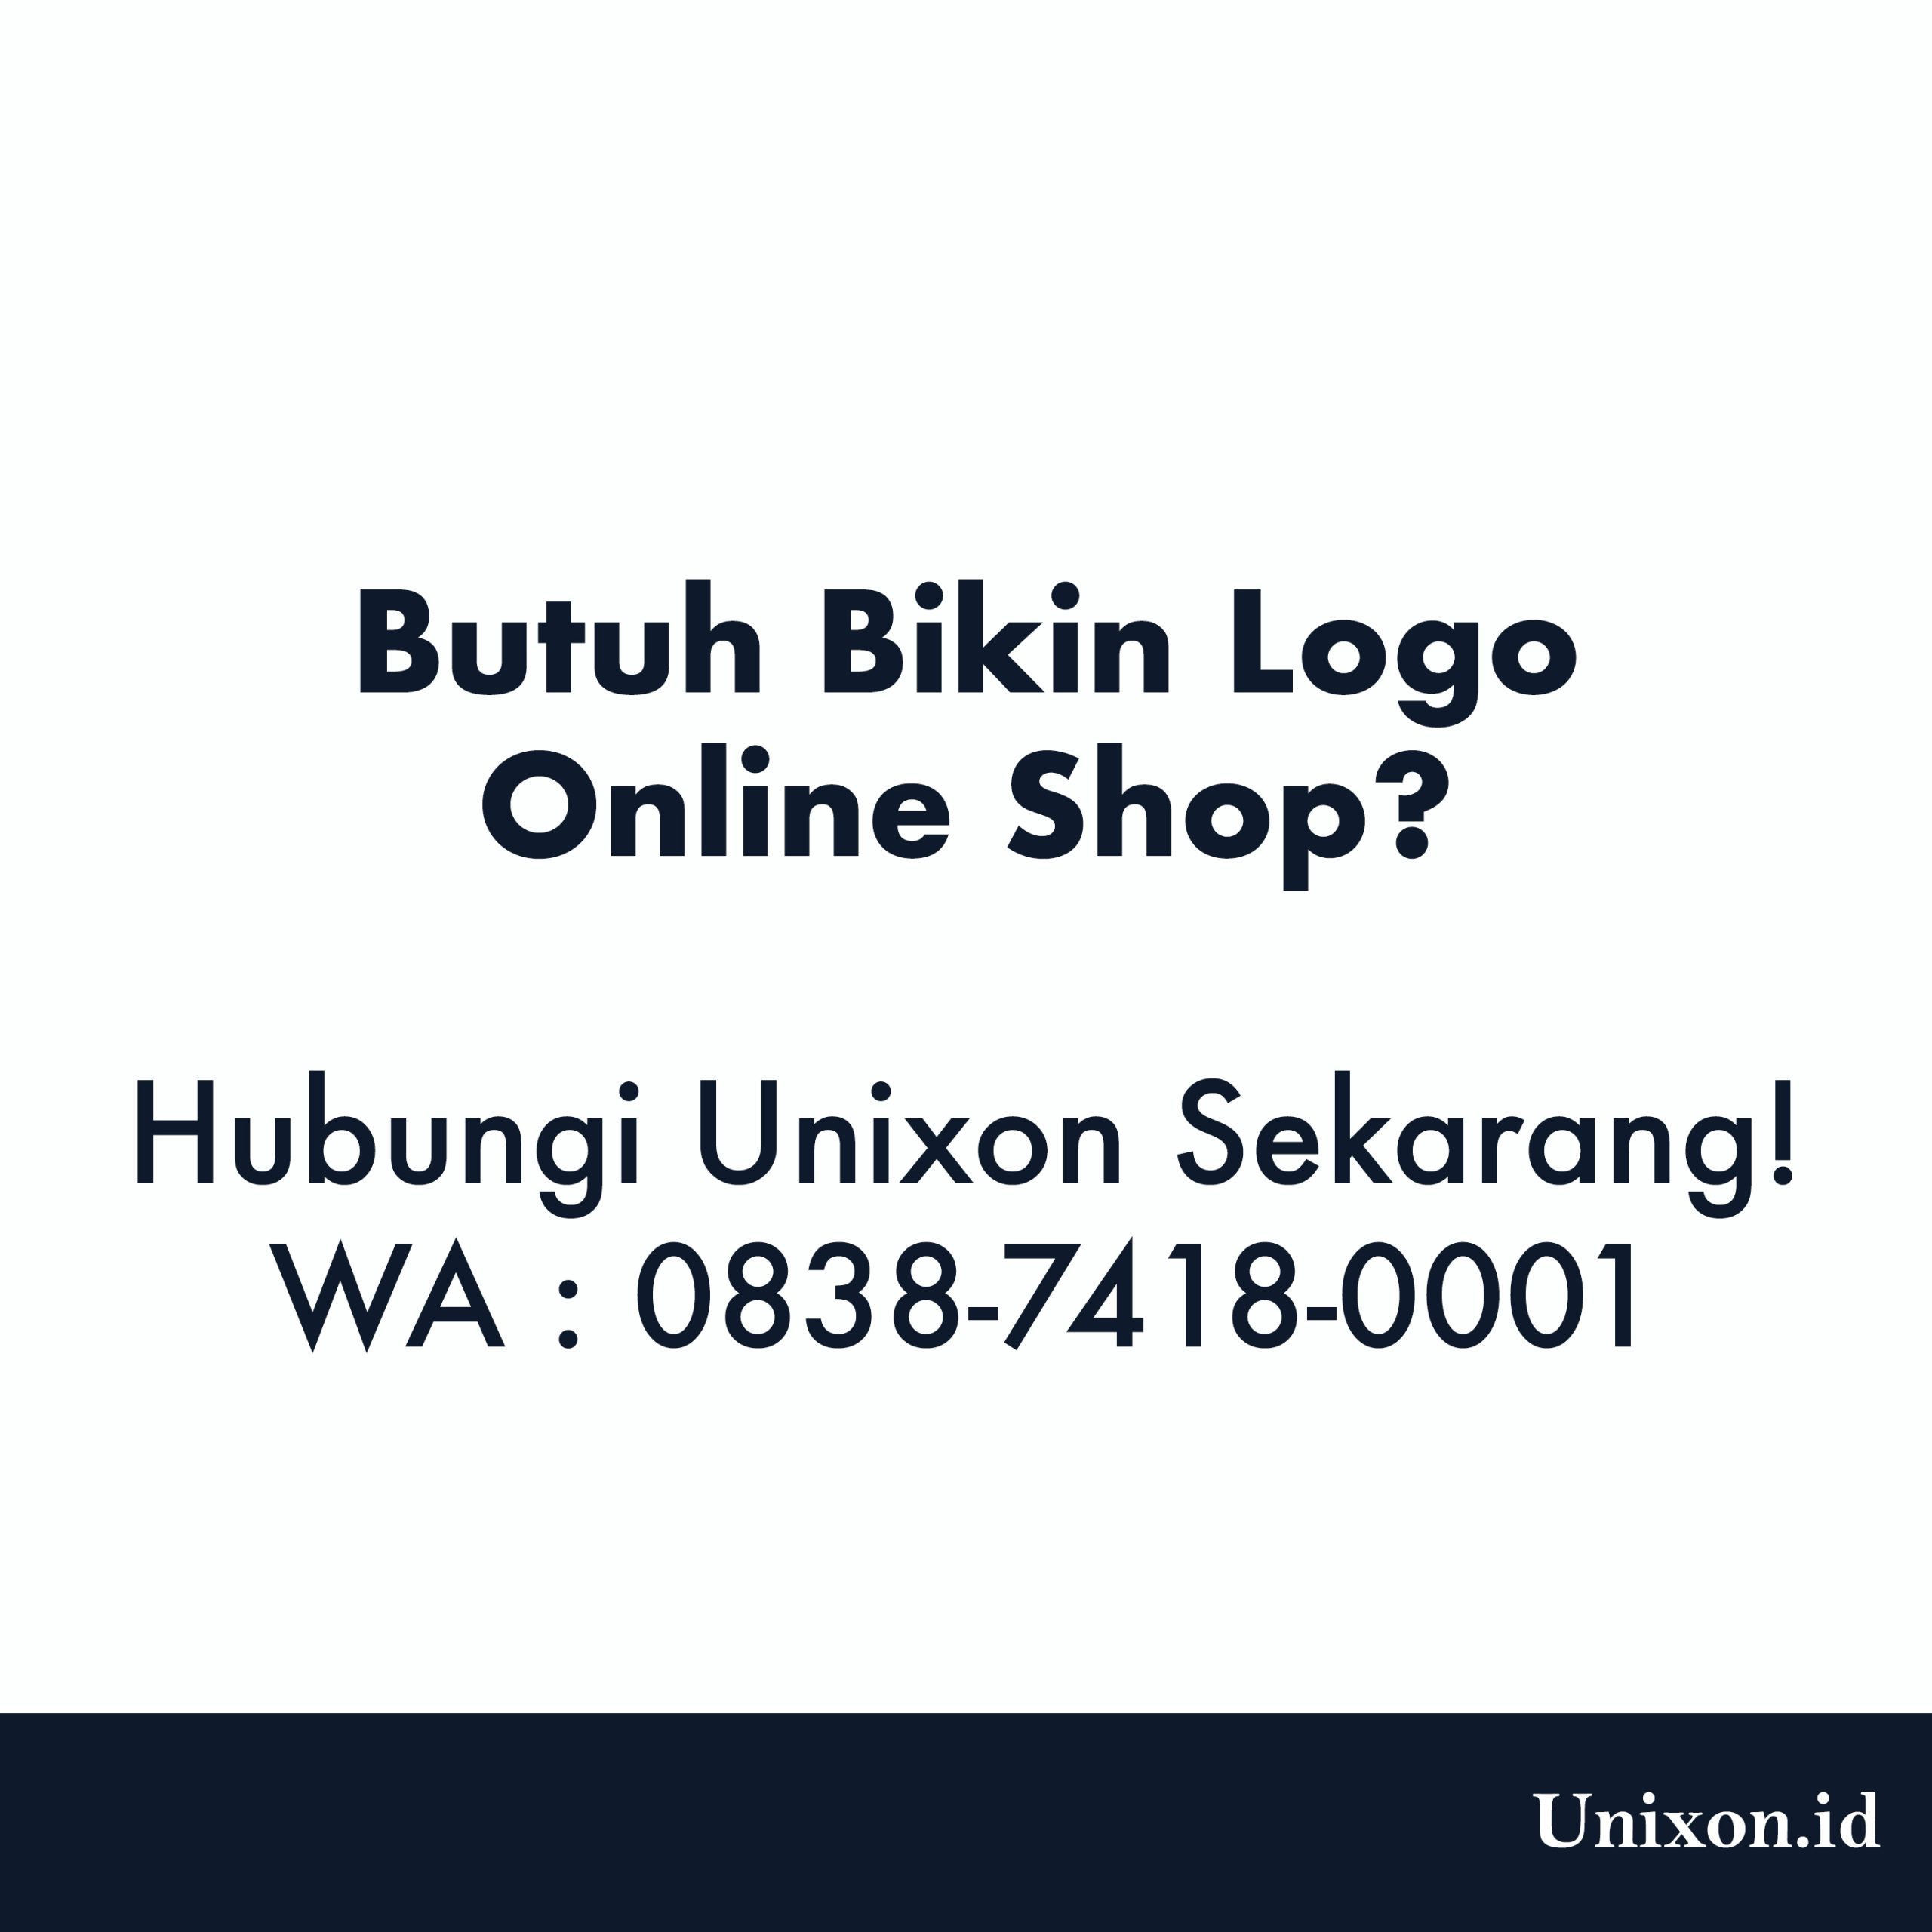 bikin logo online shop